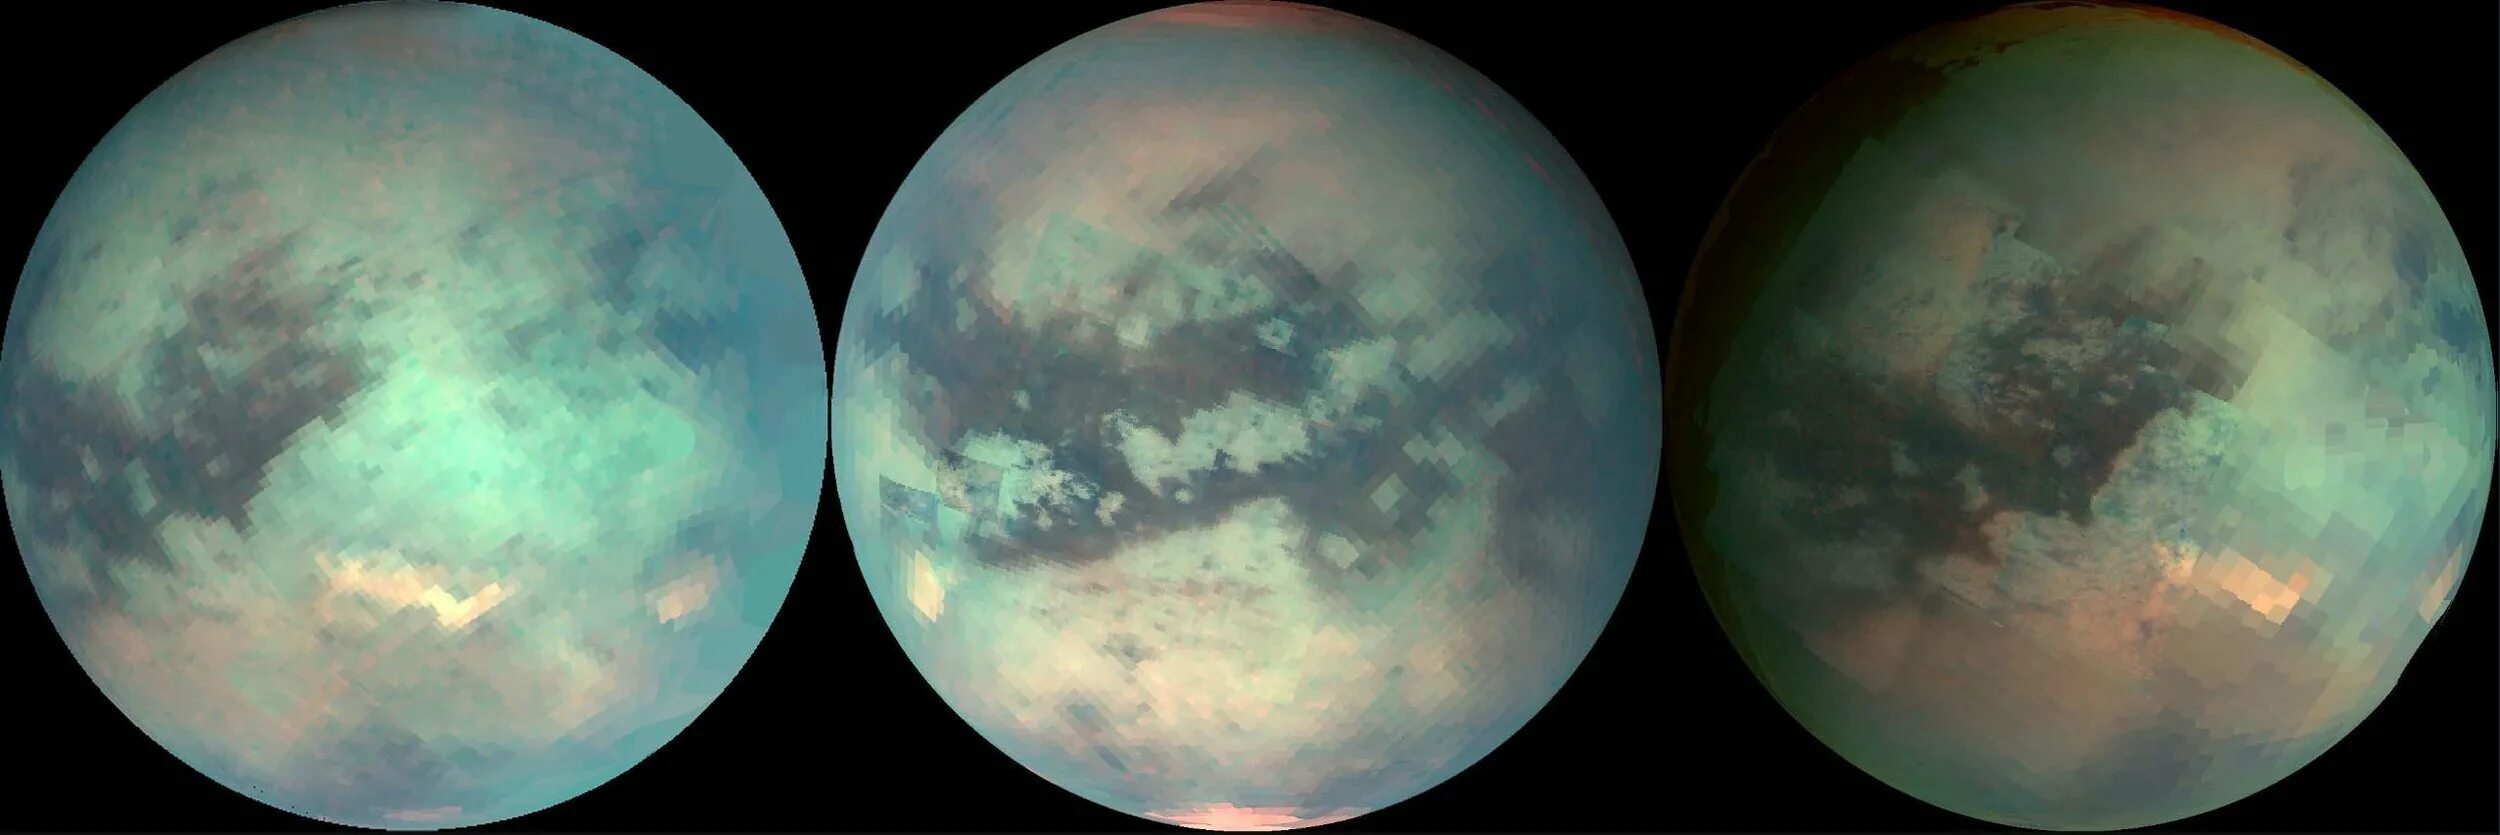 Титан Спутник Сатурна. Снимки титана спутника Сатурна. Титан Луна Сатурна. Титан Спутник Юпитера. Спутник плотной атмосферой